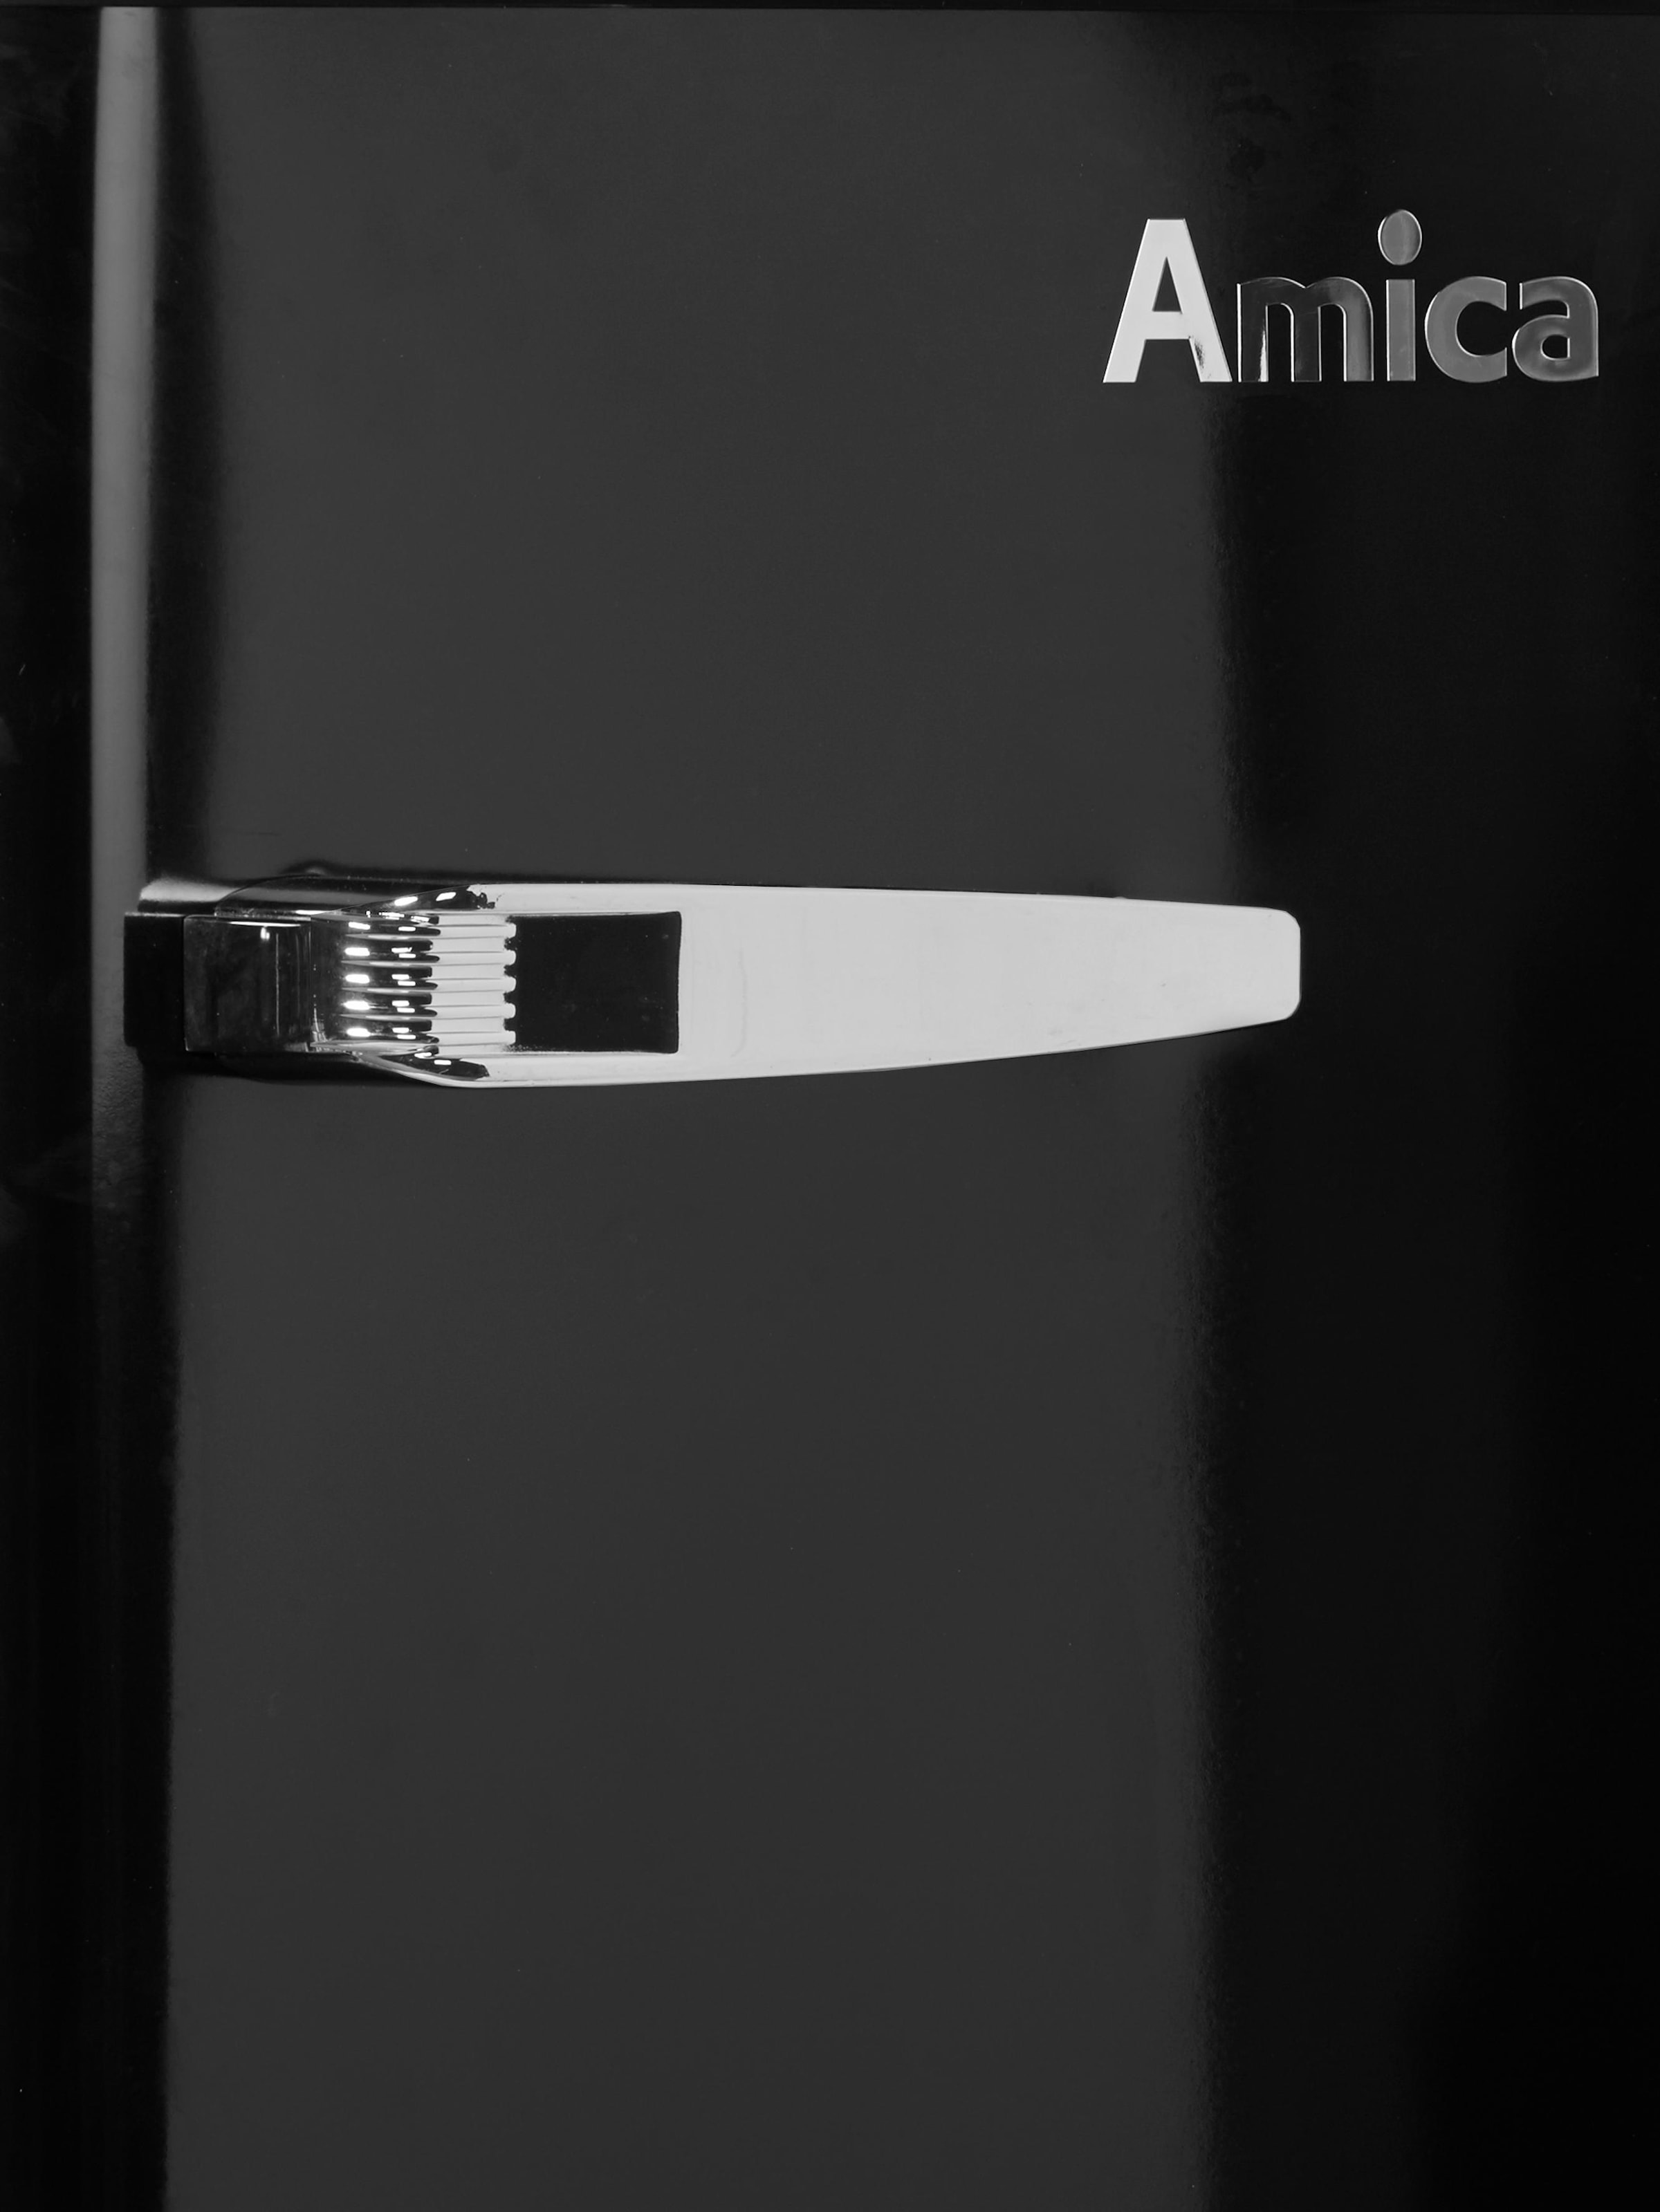 Amica Table Top Kühlschrank, KS 15614 S, 87,5 cm hoch, 55 cm breit